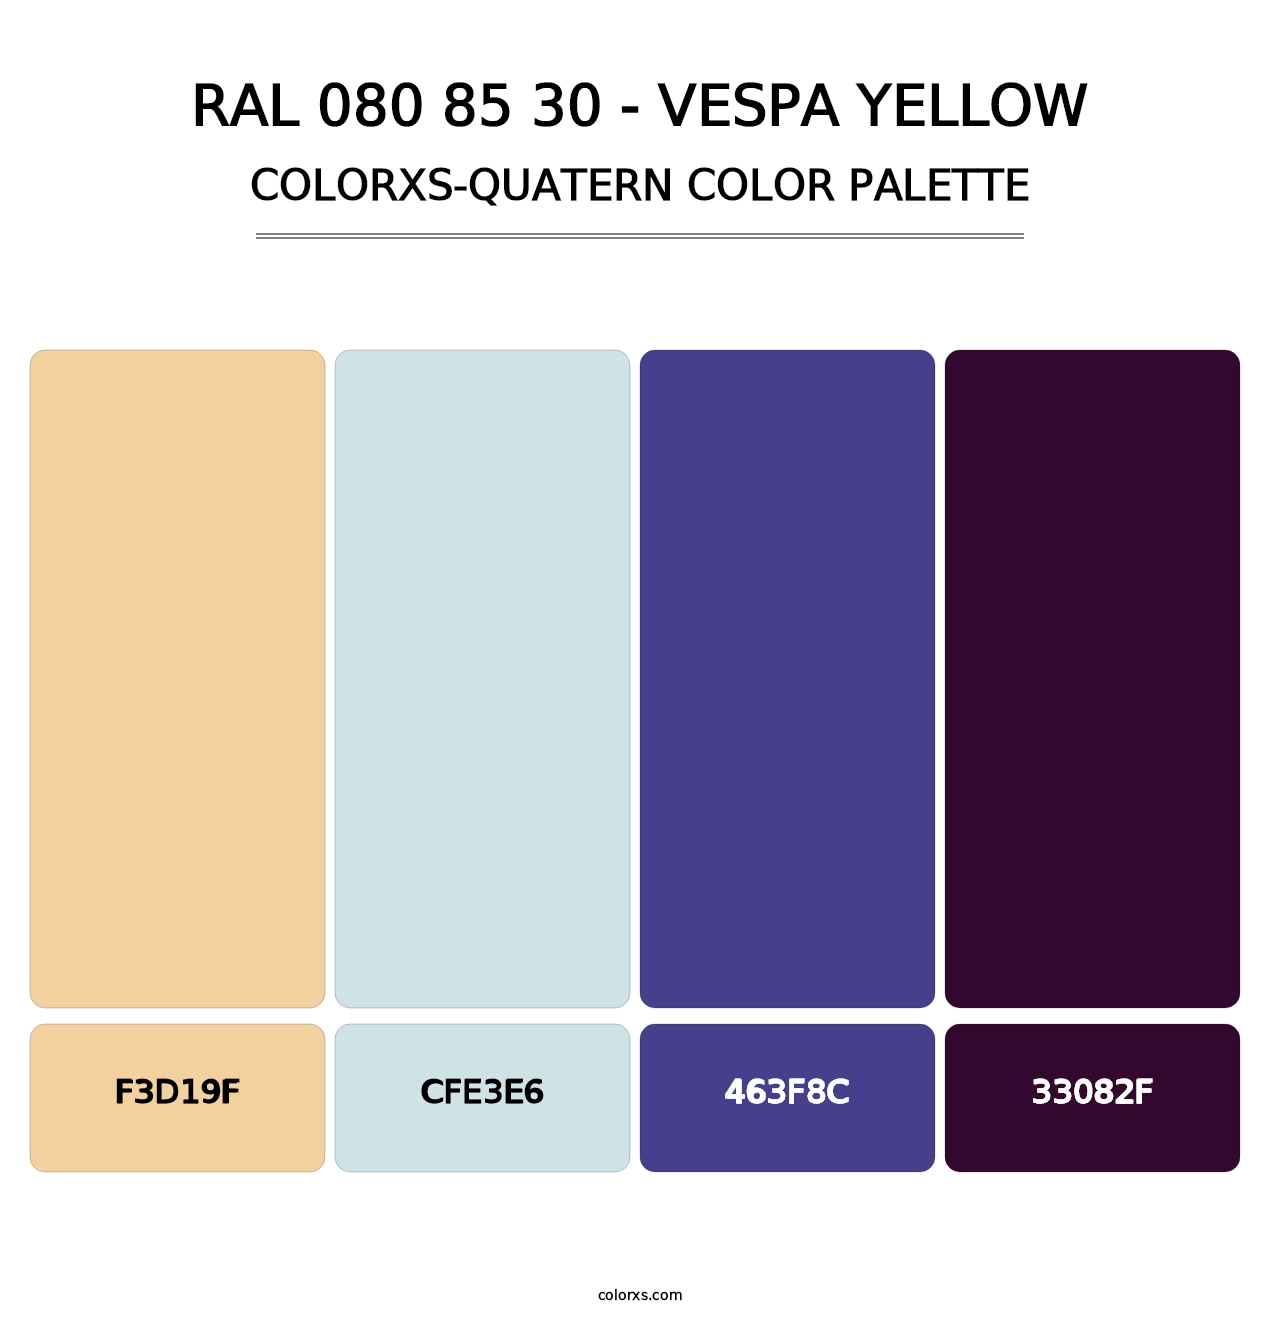 RAL 080 85 30 - Vespa Yellow - Colorxs Quatern Palette